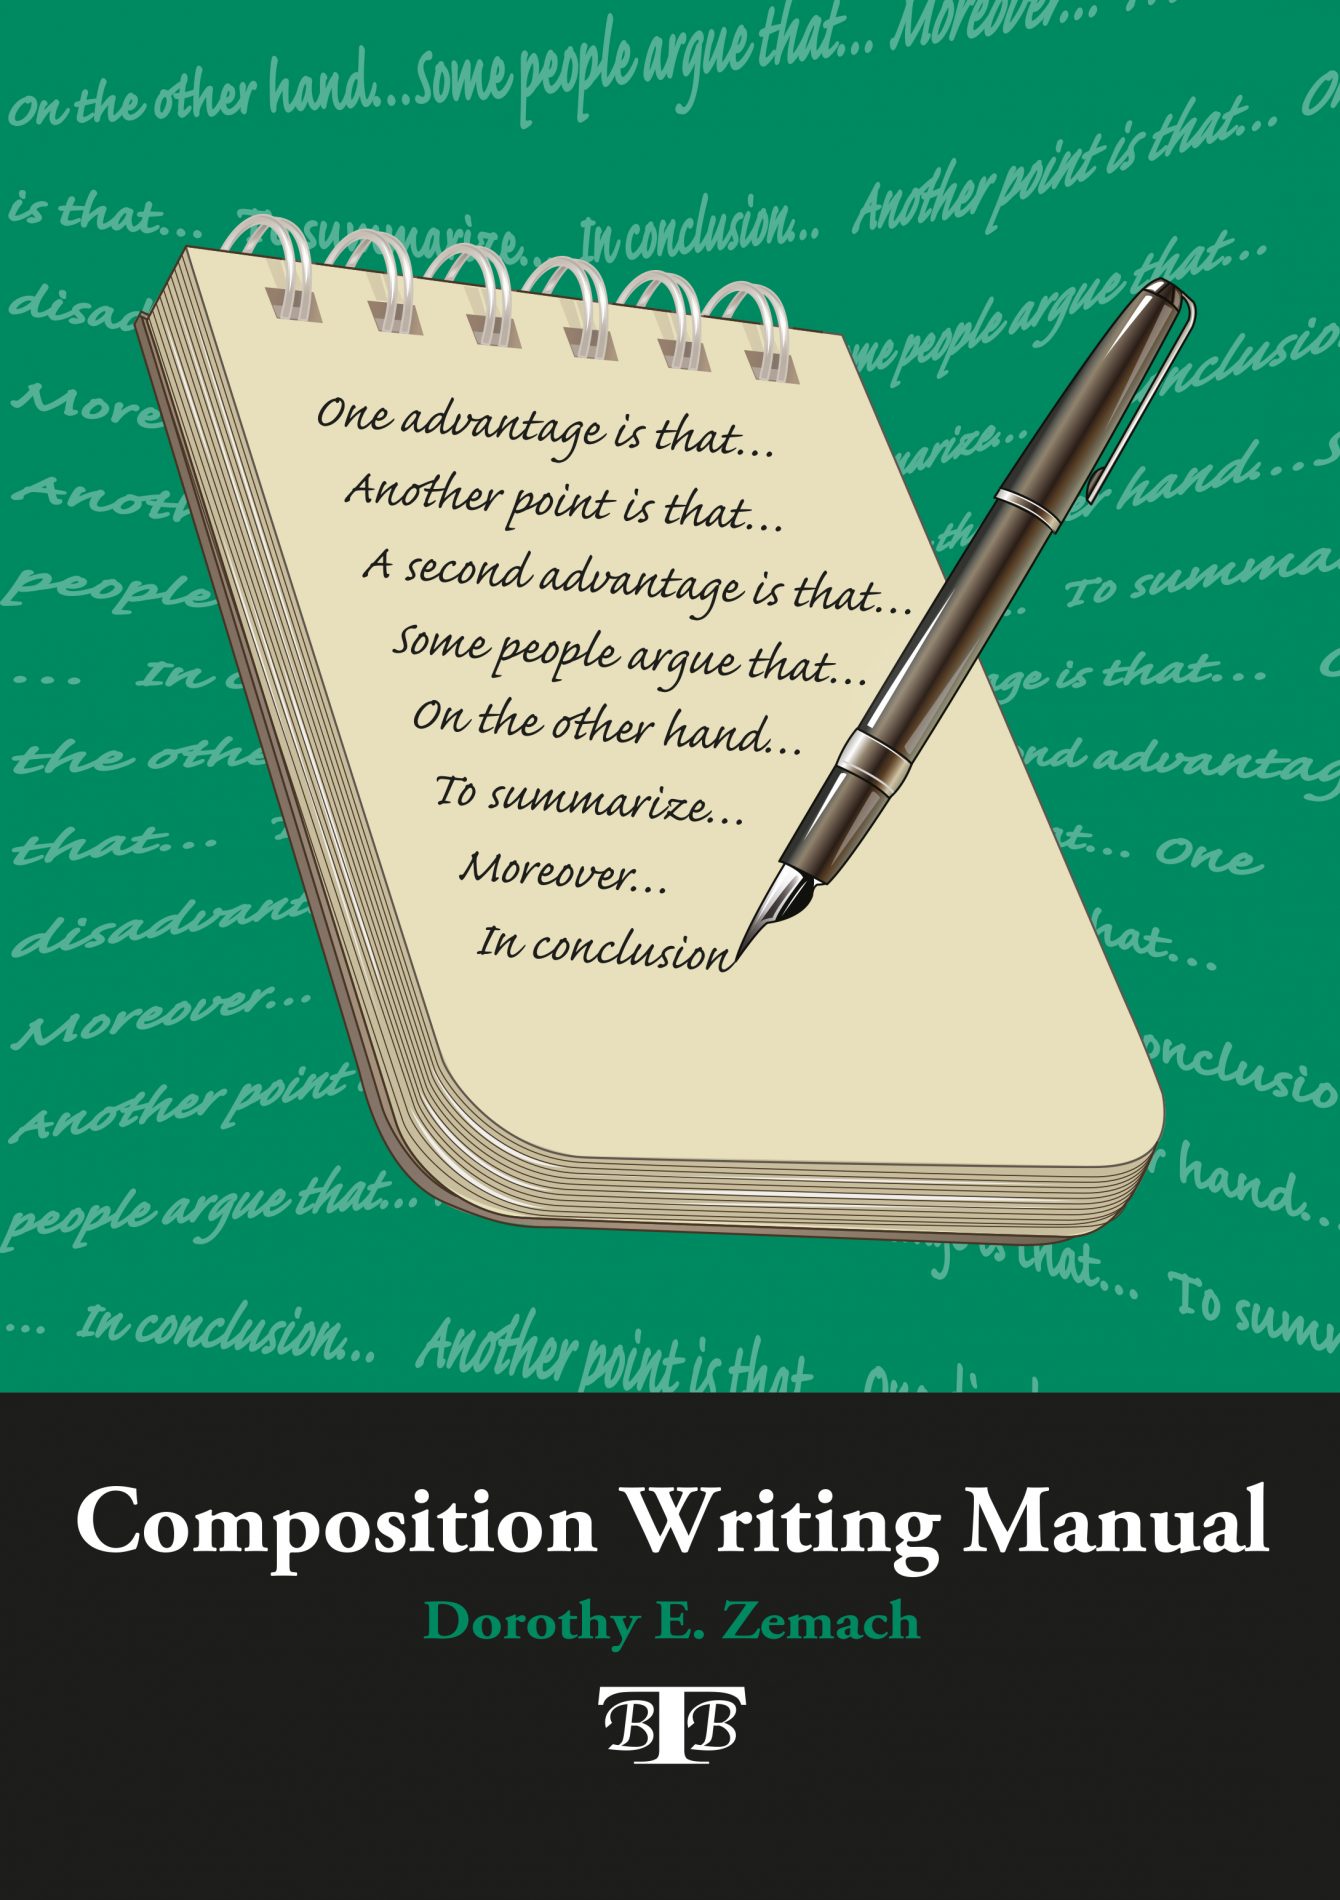 Composition Writing Manual – BTB Press